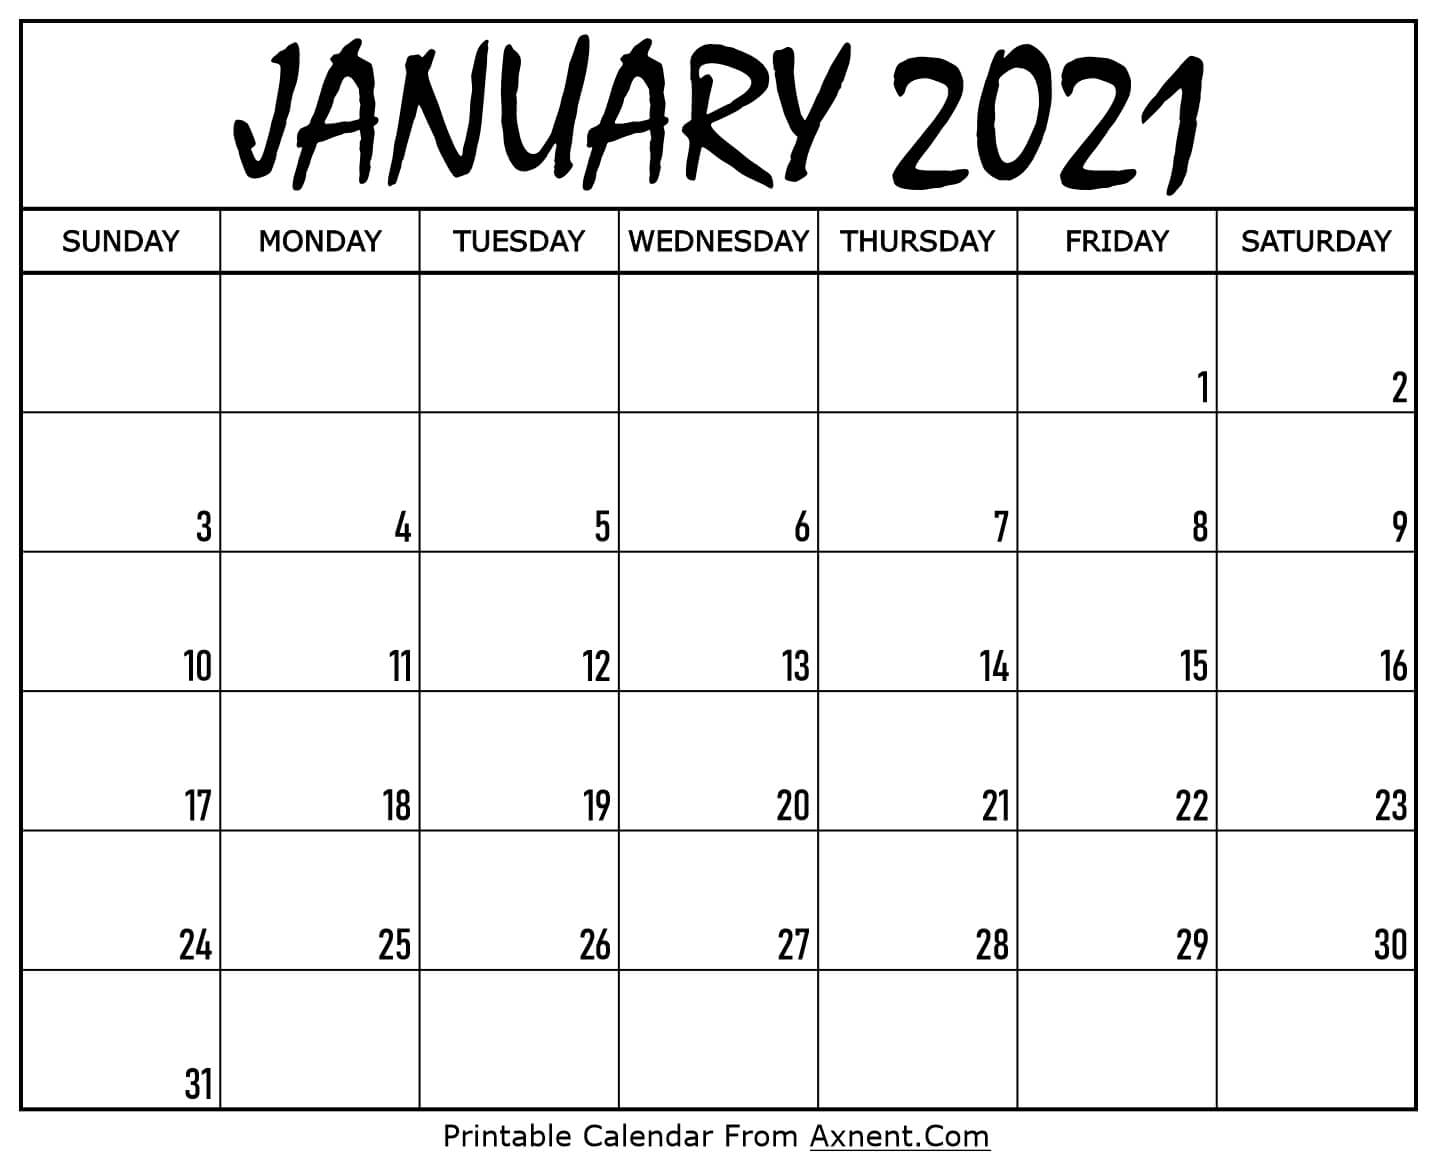 Printable January 2021 Calendar Template Time Management 1